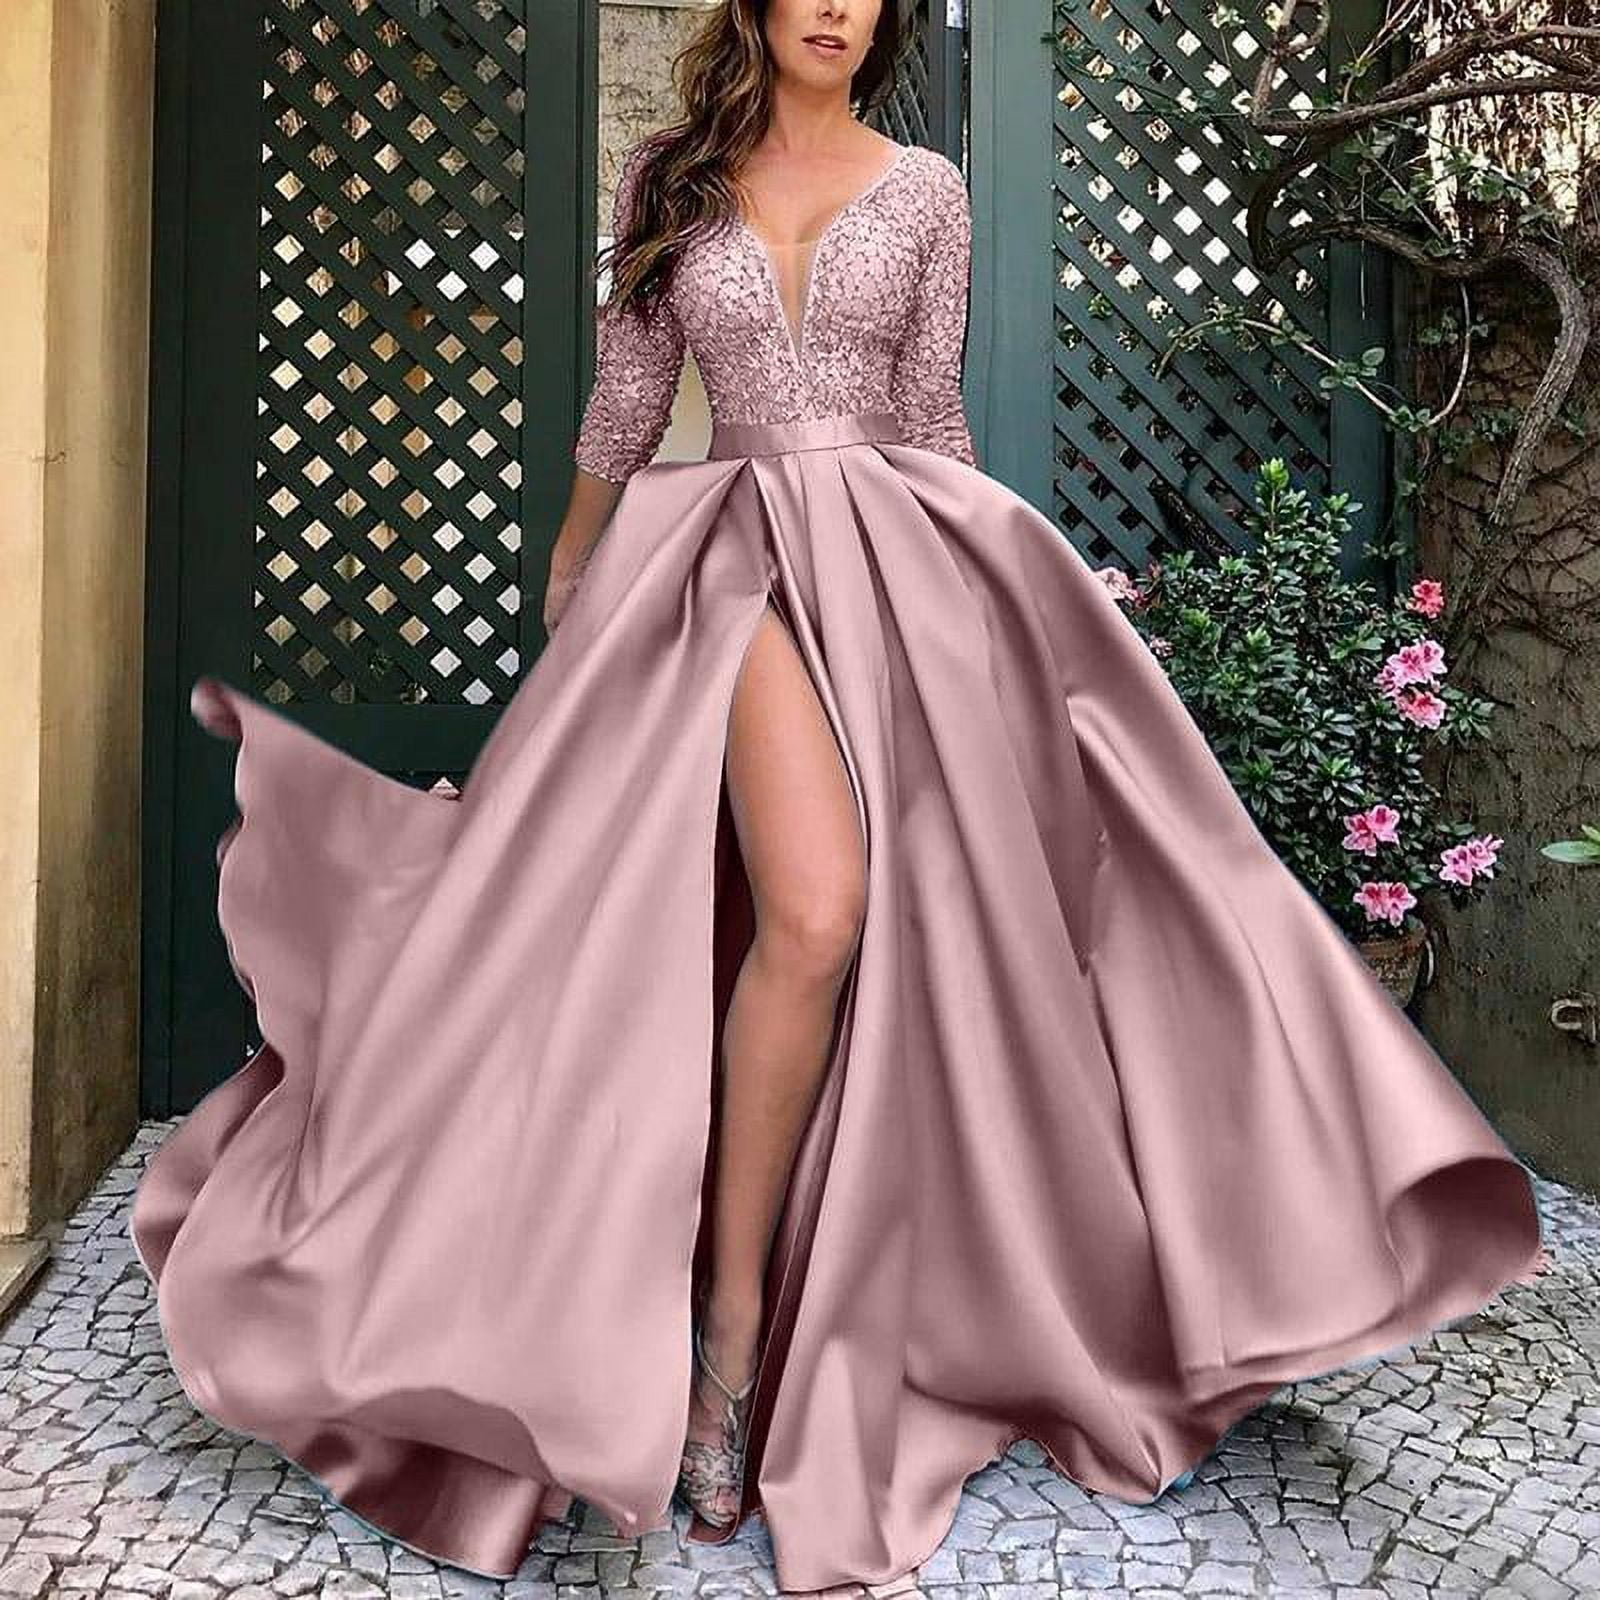 Sl-5095 Suli Spaghetti Straps Lace Up Wedding Dress 2020 New Court Train  Bride Dress Appliques 3d Flower Crystal Wedding Gowns - Wedding Dresses -  AliExpress